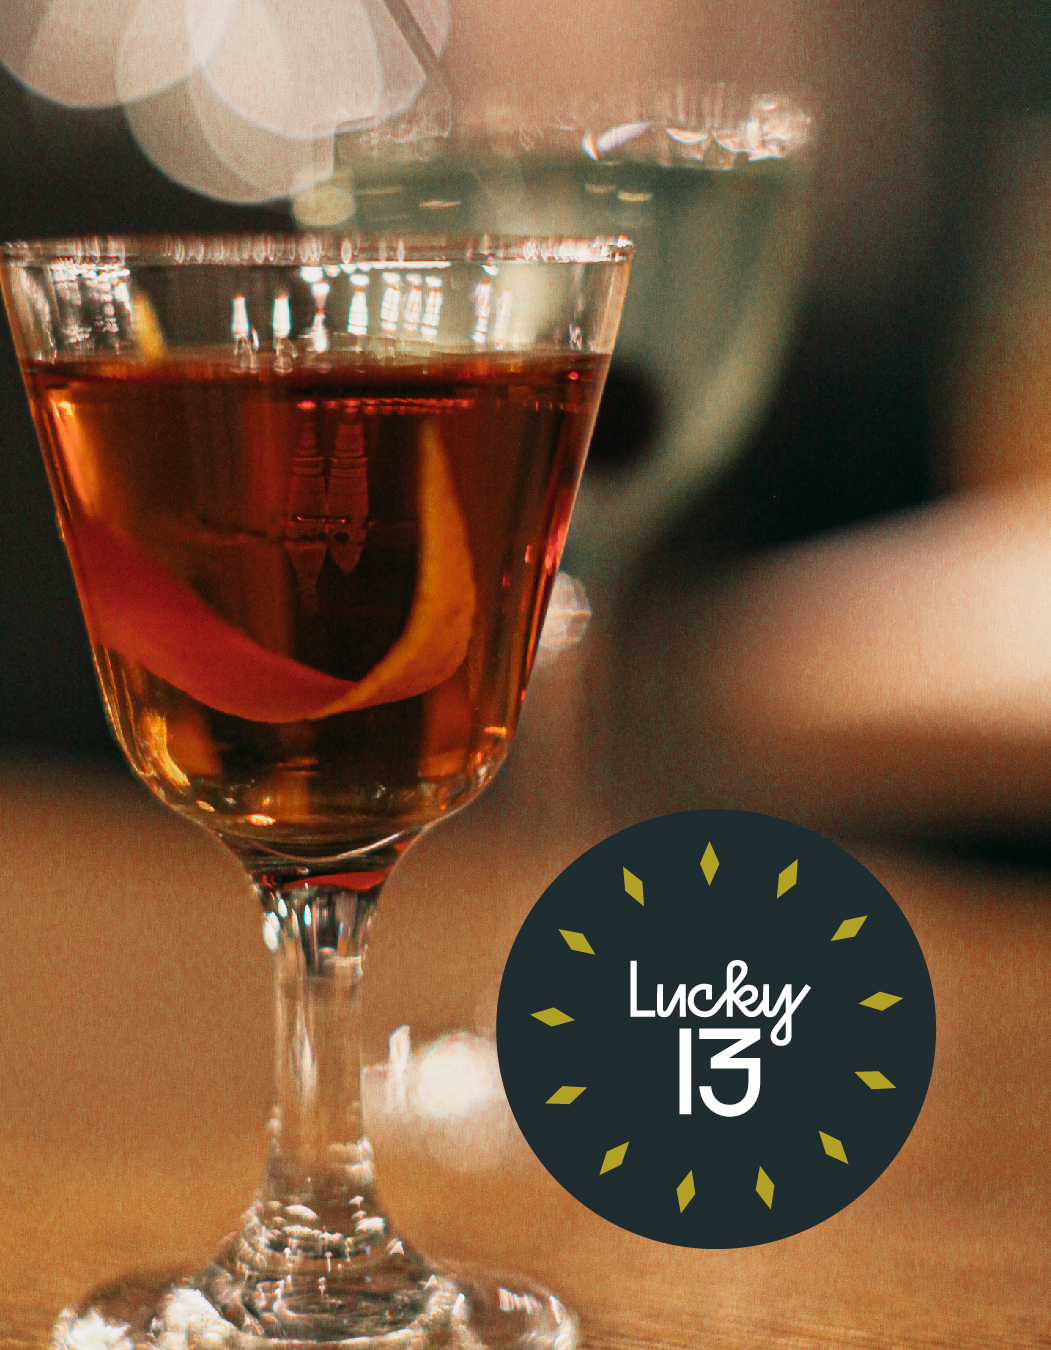 lucky-13-spirits-alcohol-branding-toronto-graphic-brand-designer-08